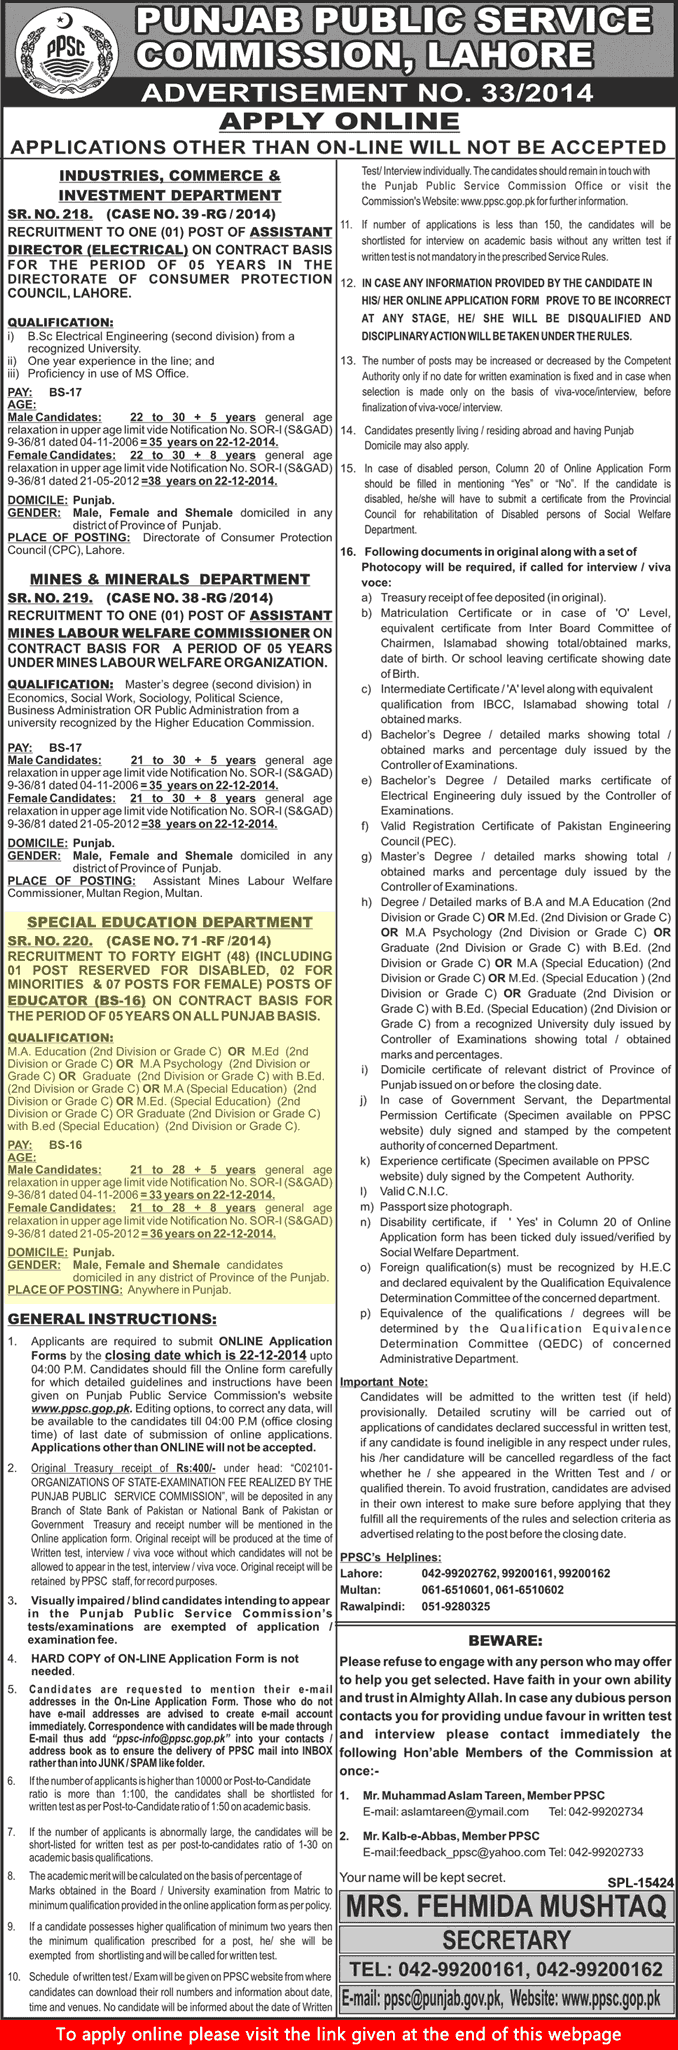 PPSC Special Education Department Punjab Jobs 2014 December / November Educators